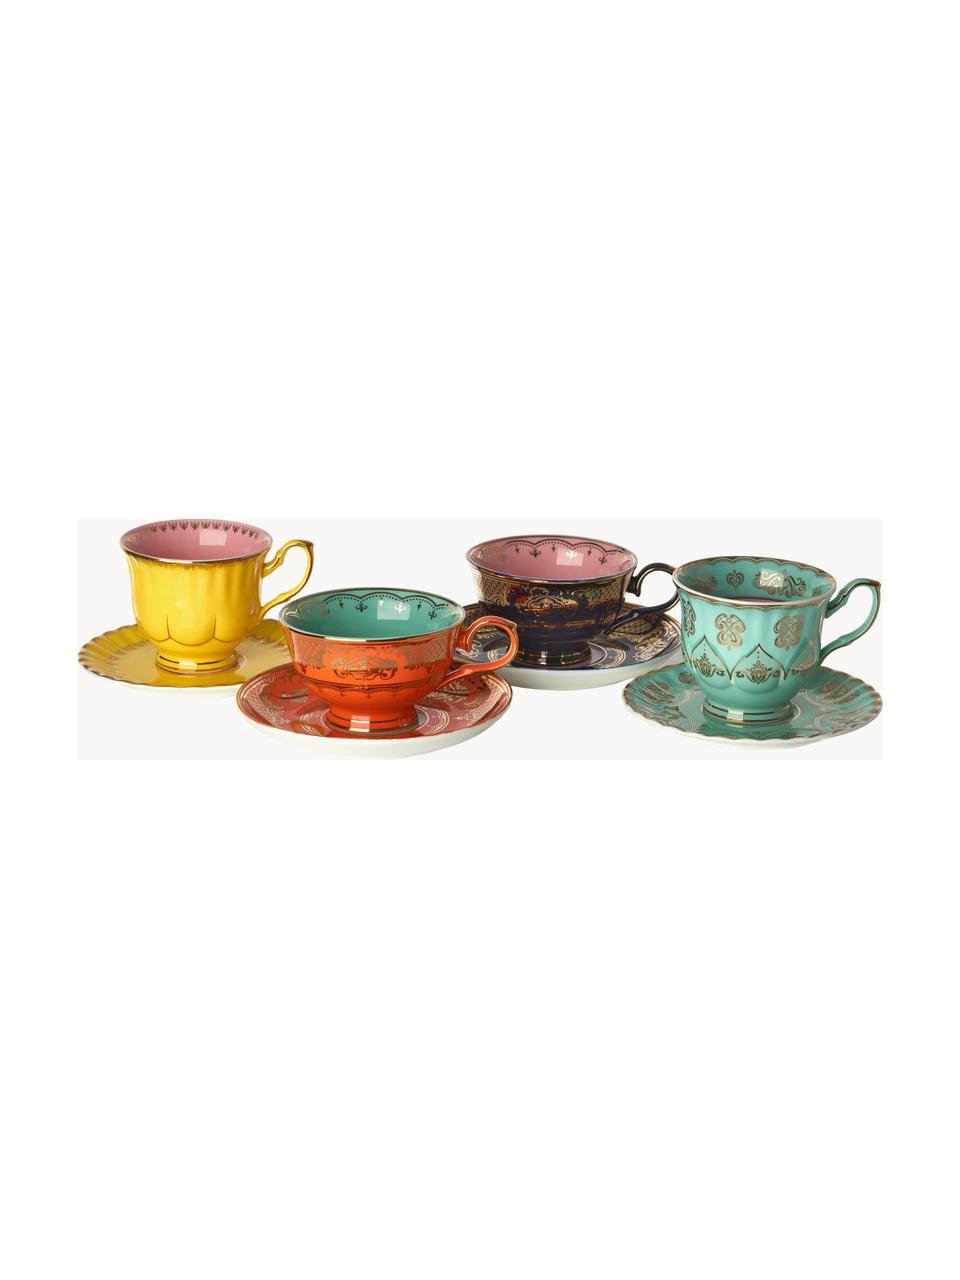 Sada šálků na čaj s podšálky Grandpa, 4 díly, Porcelán, Více barev, Sada s různými velikostmi